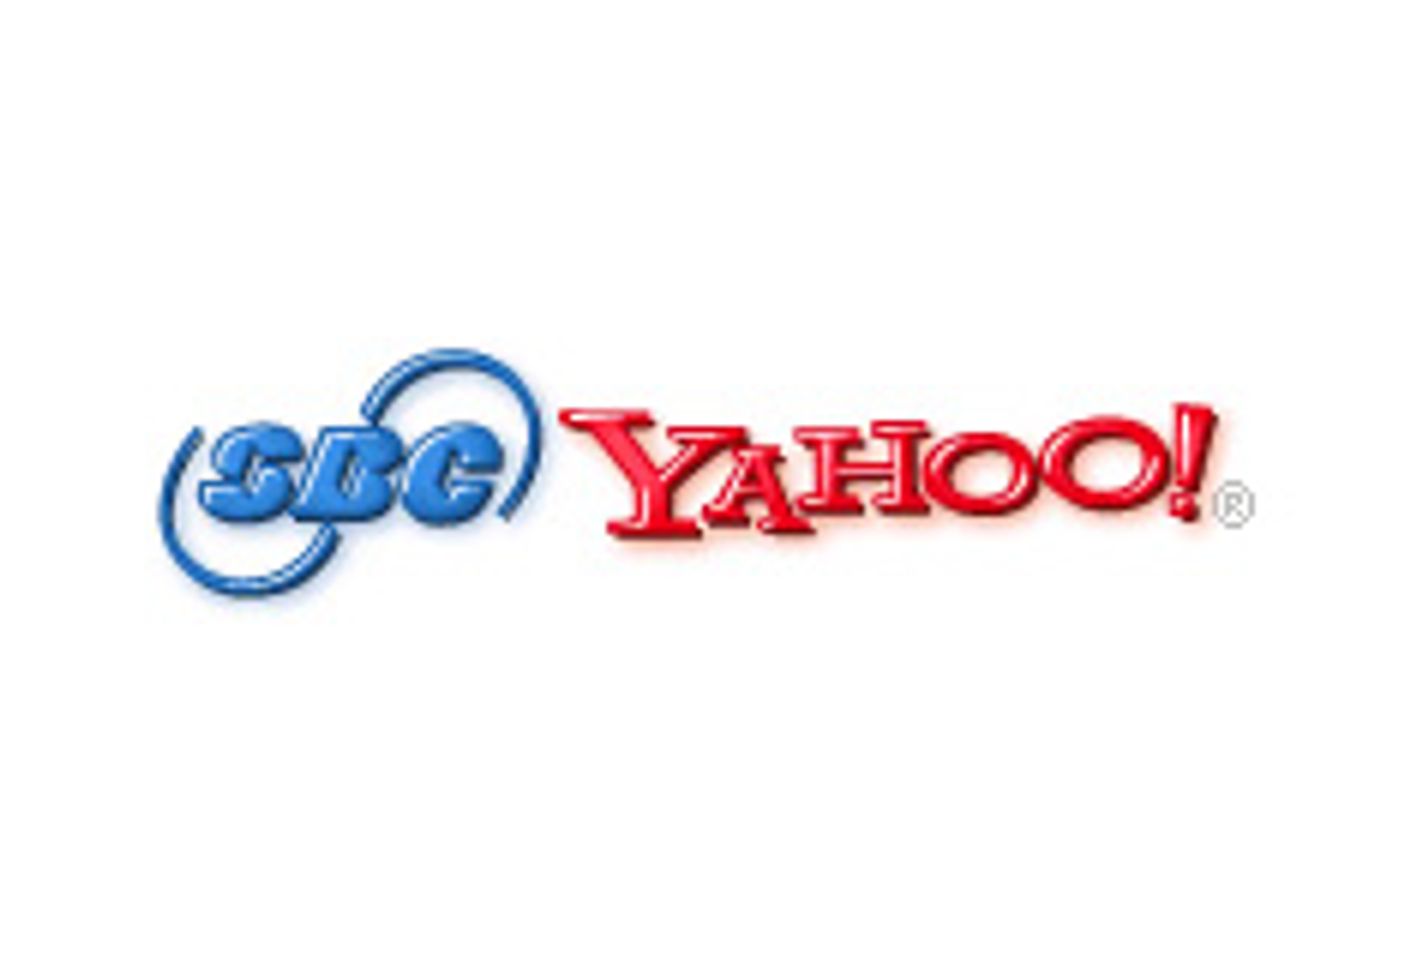 SBC, Yahoo Extend Alliance to Home TV, Audio